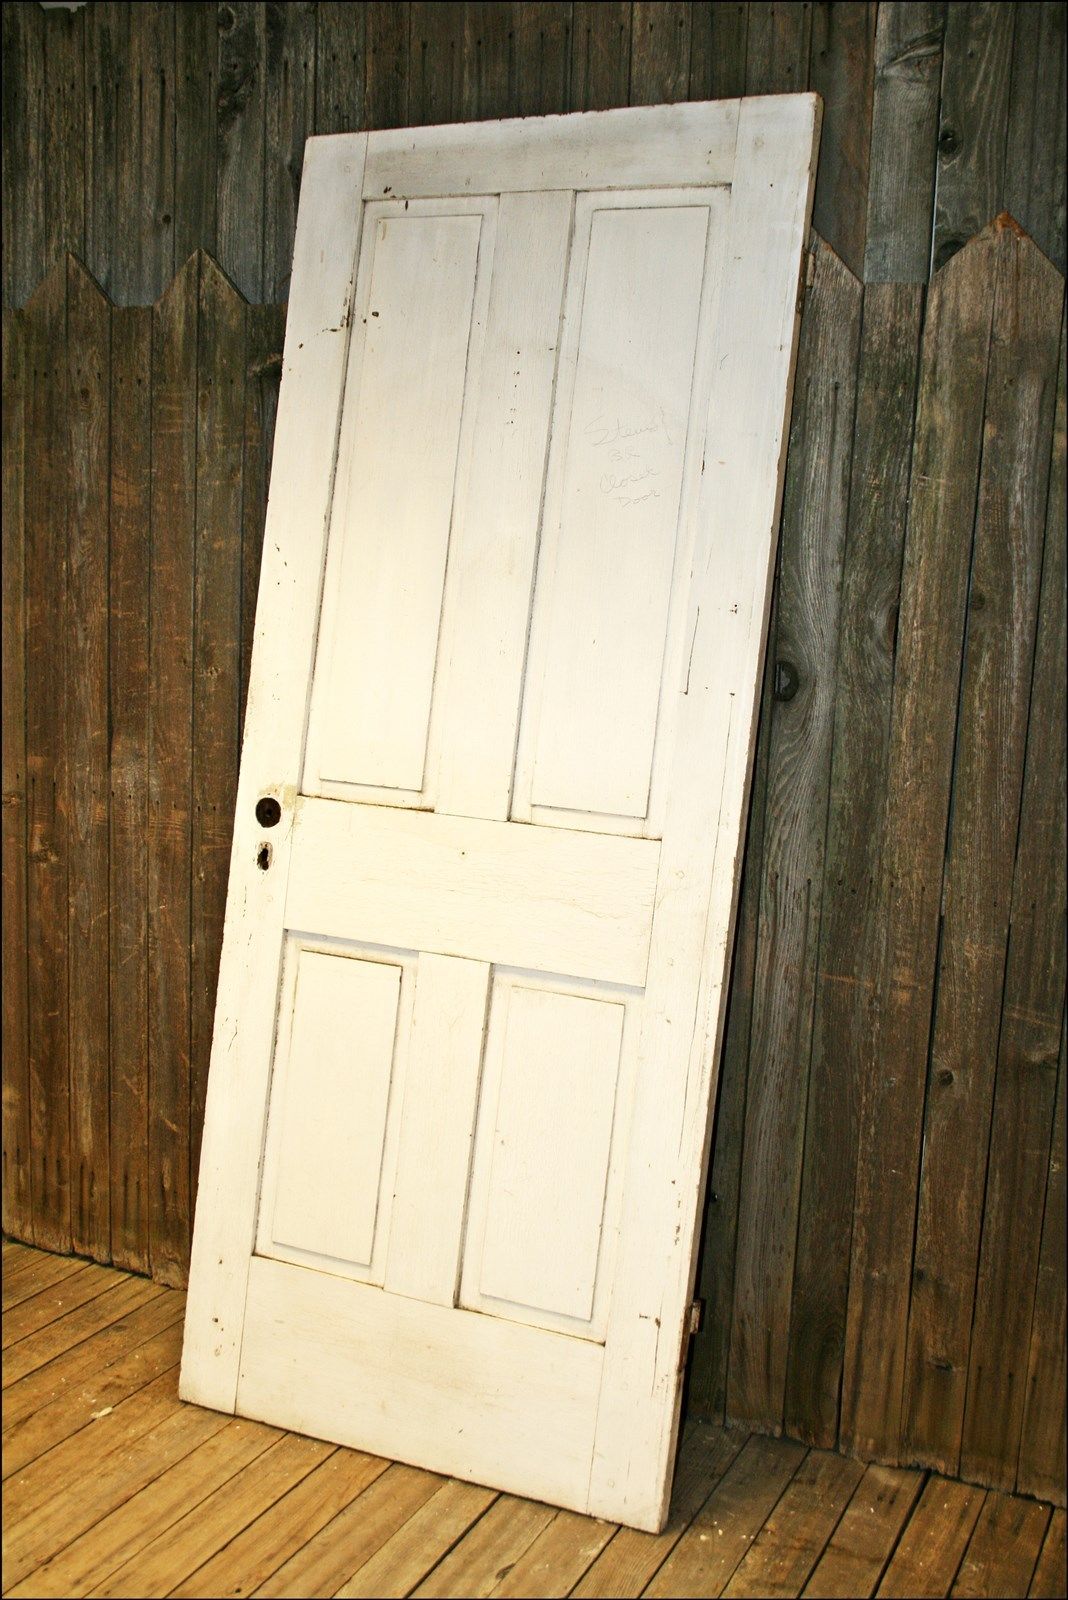 Vintage WOOD DOOR 4 paneled wooden antique shutter architectural salvage old #2